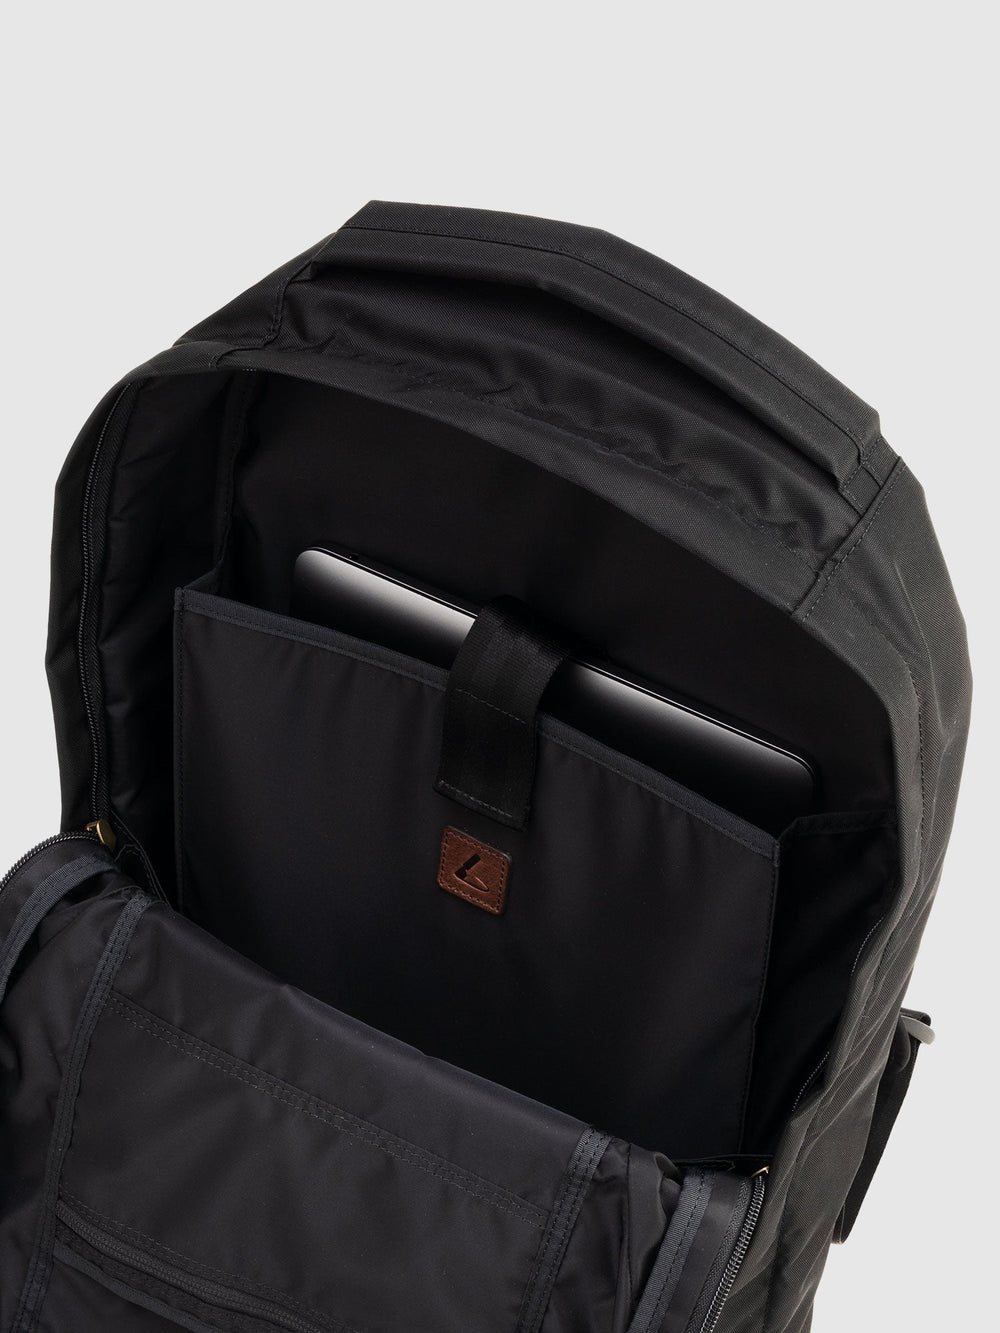 CORDURA® Nylon Backpack